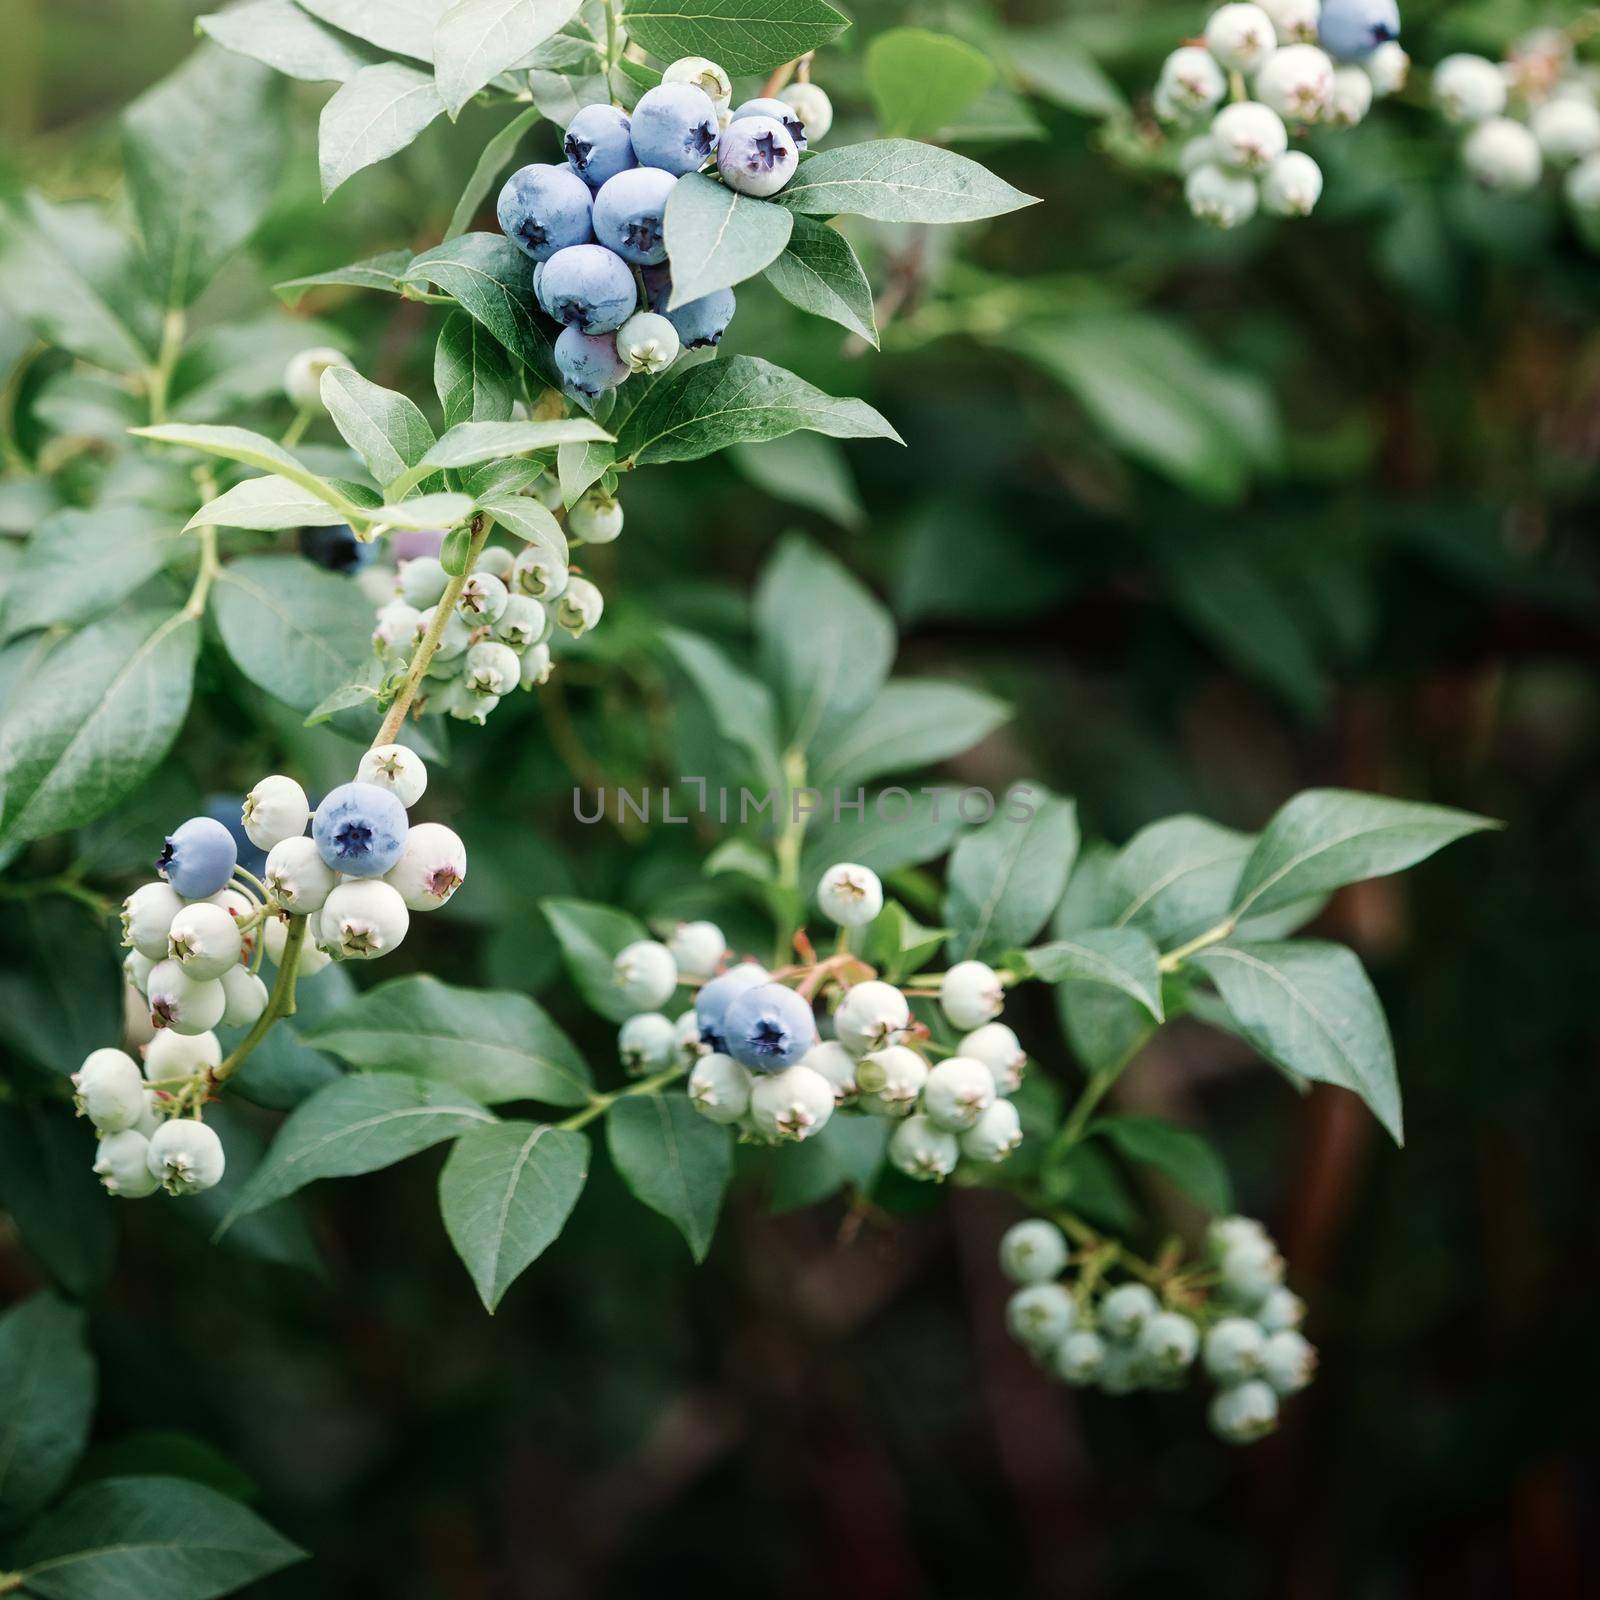 Blueberries (heathberry) growing on bush in a field